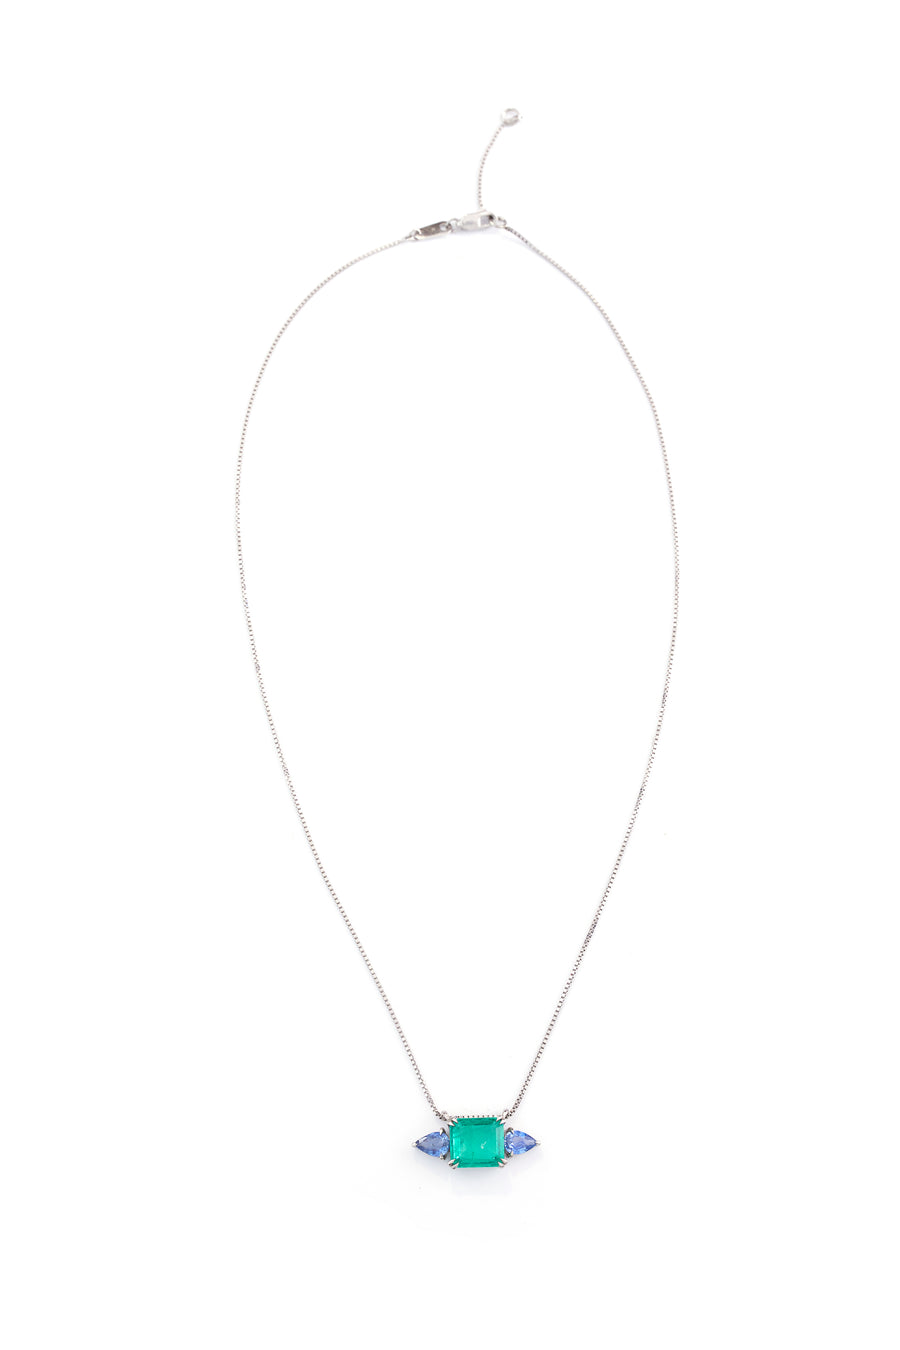 Emerald & sapphire nexus pendant necklace